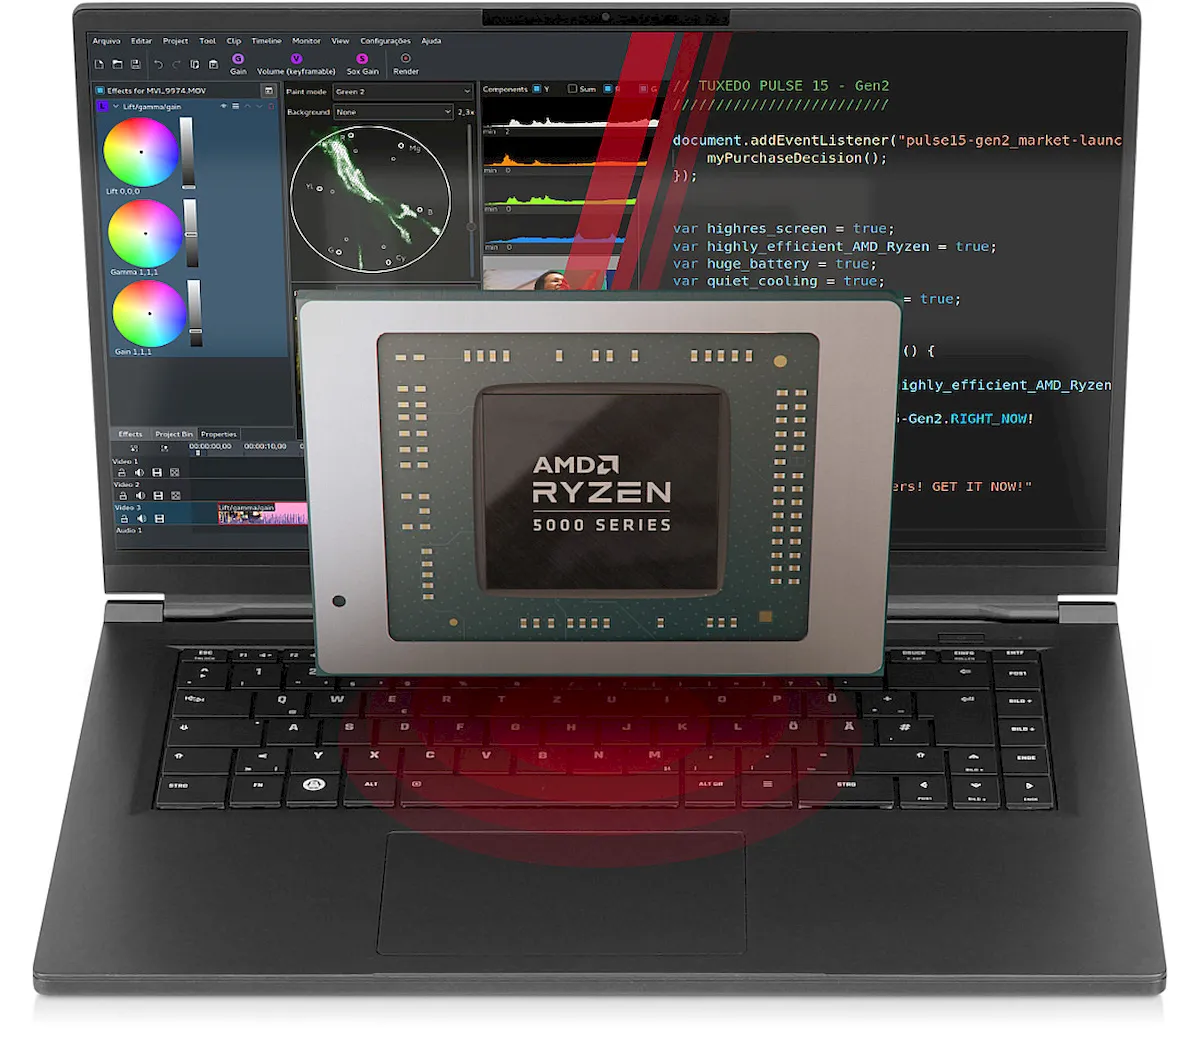 TUXEDO Pulse 15 Gen2 lançado com Ryzen 7 5700U e tela WQHD